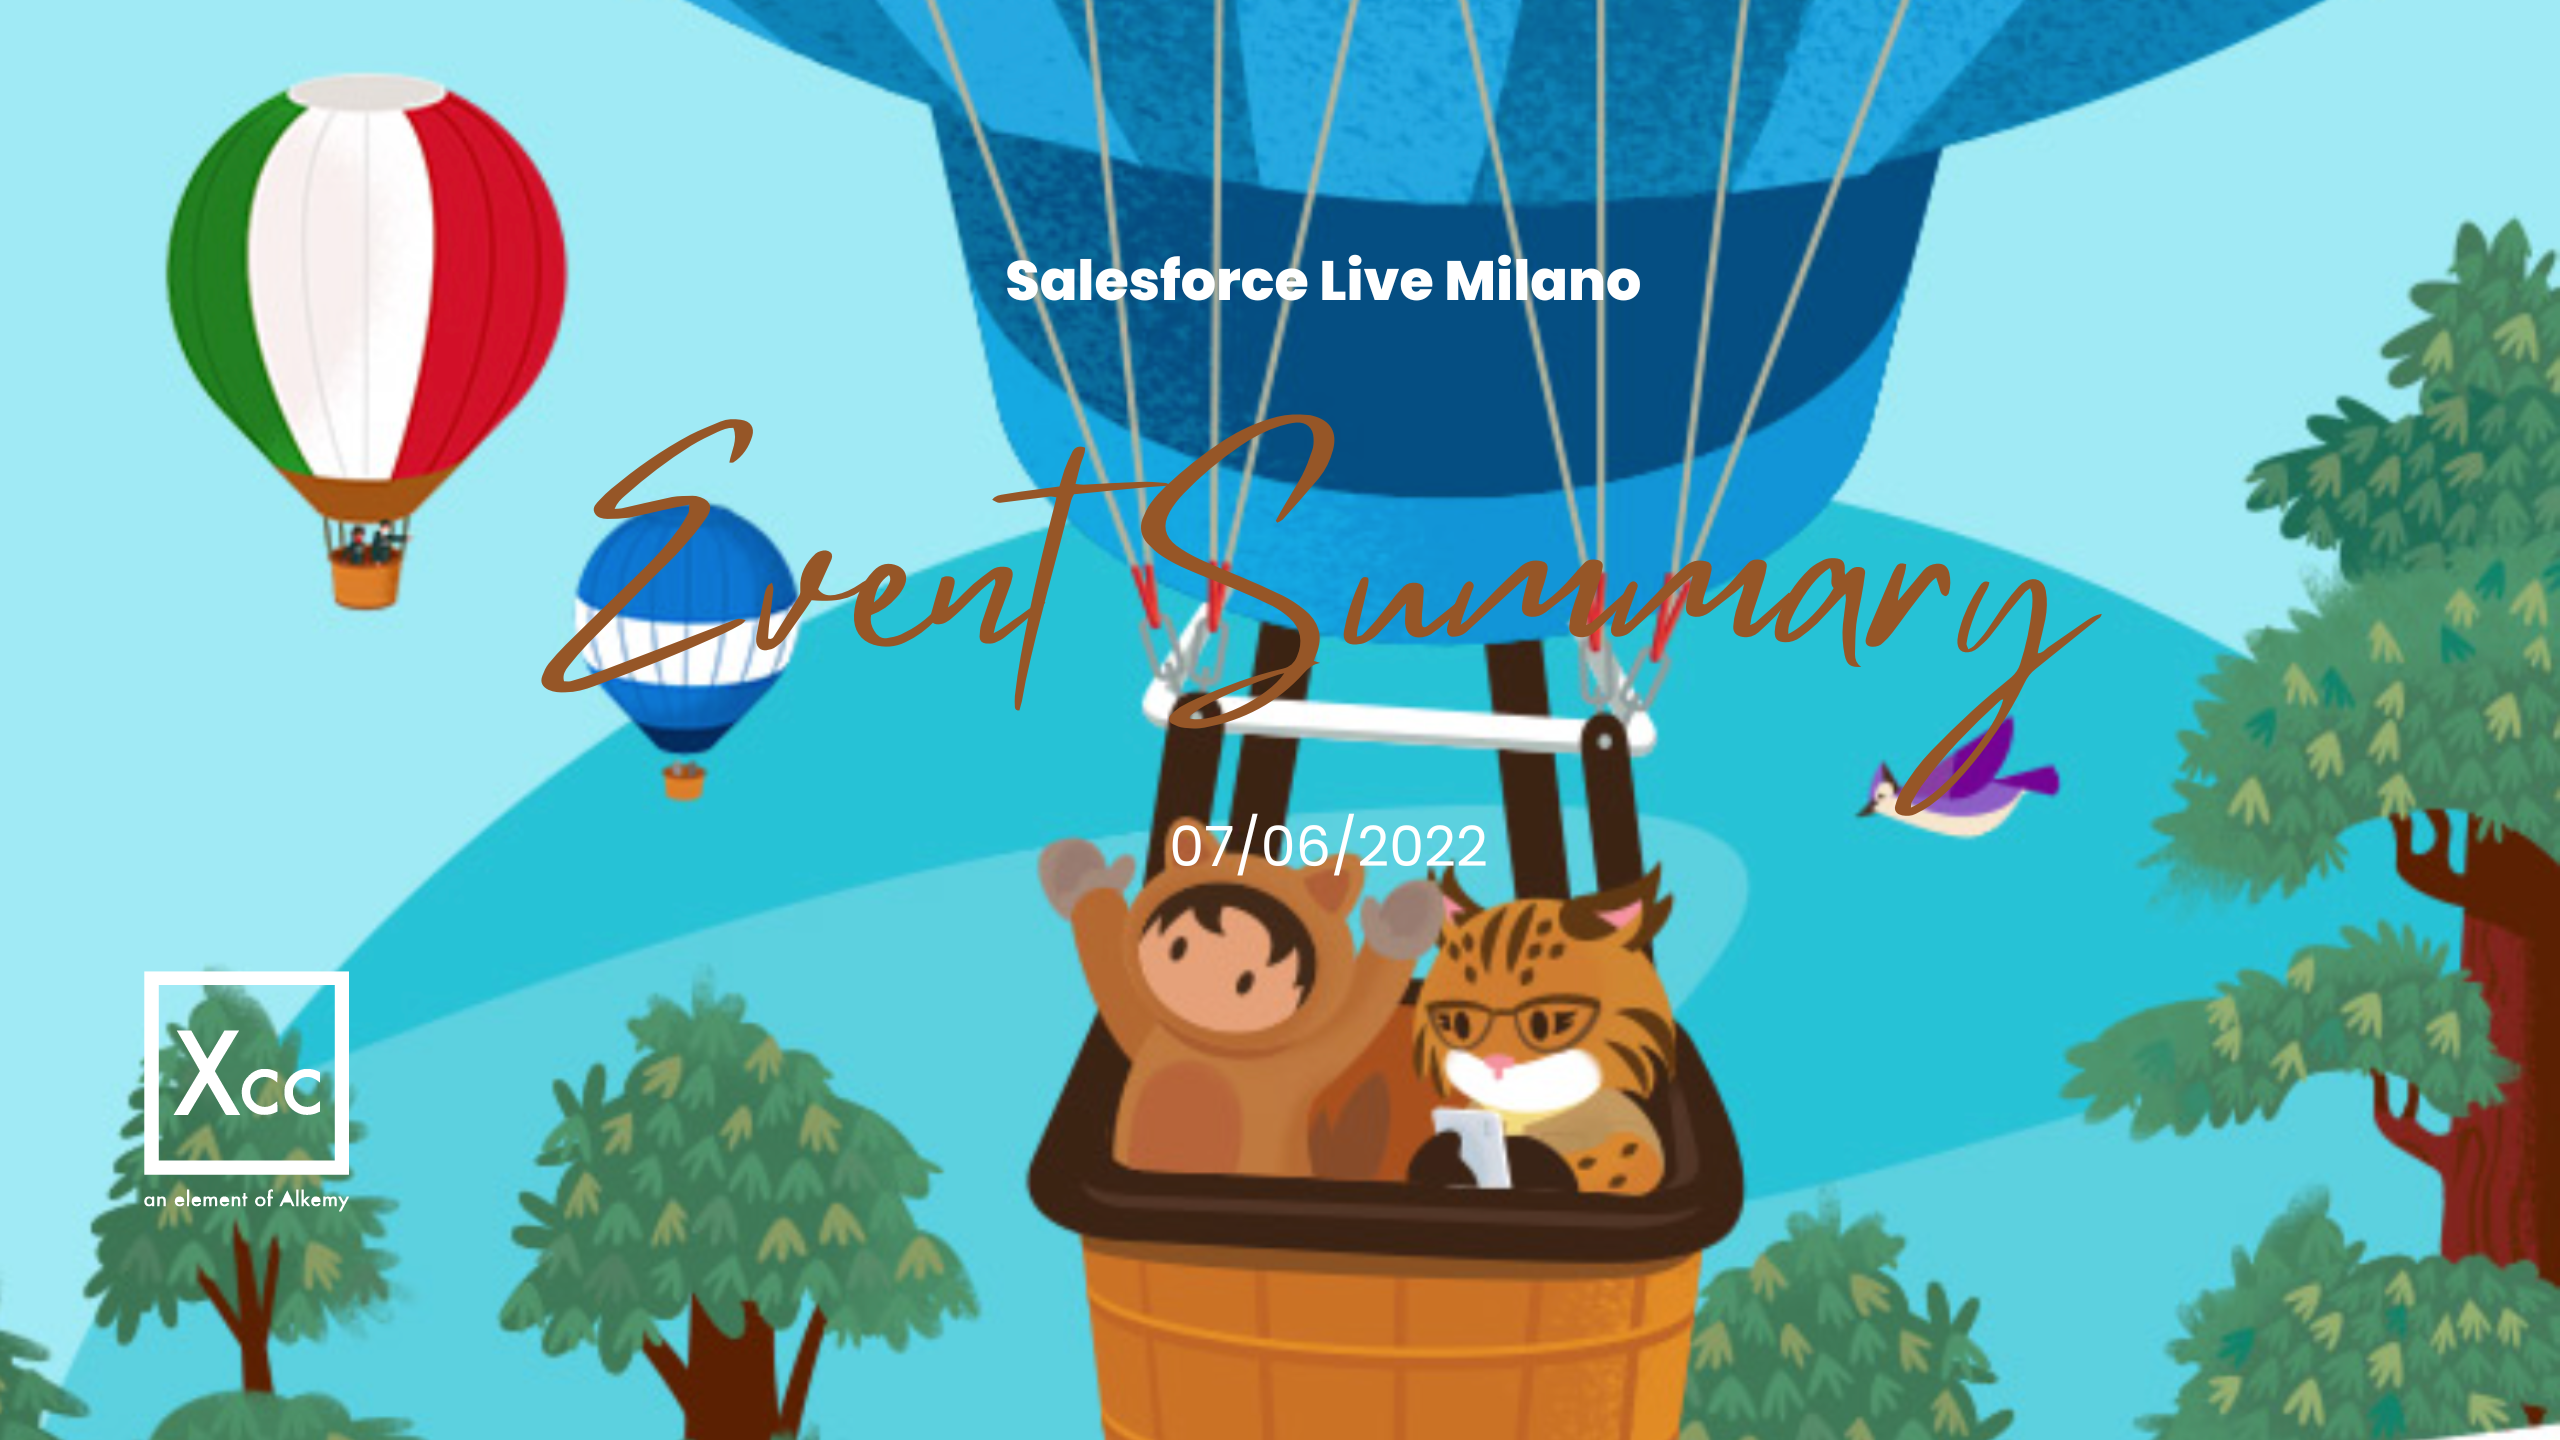 XCC al Salesforce Live Milano 2022– Event Summary